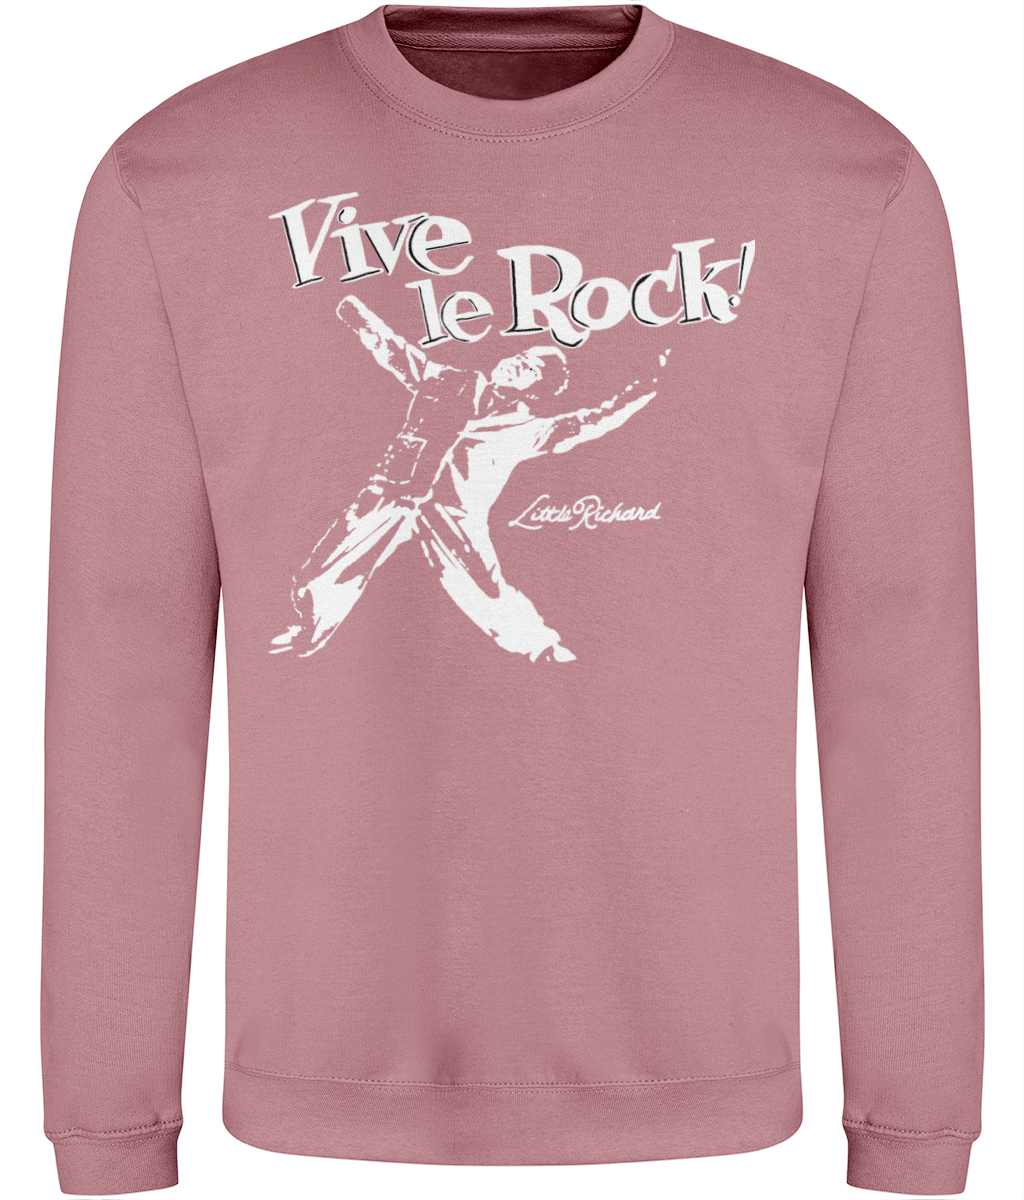 Rock T Shirts T – n Shir Little GAS Roll festival-GAS Wembley Richard-Sweatshirt-1972